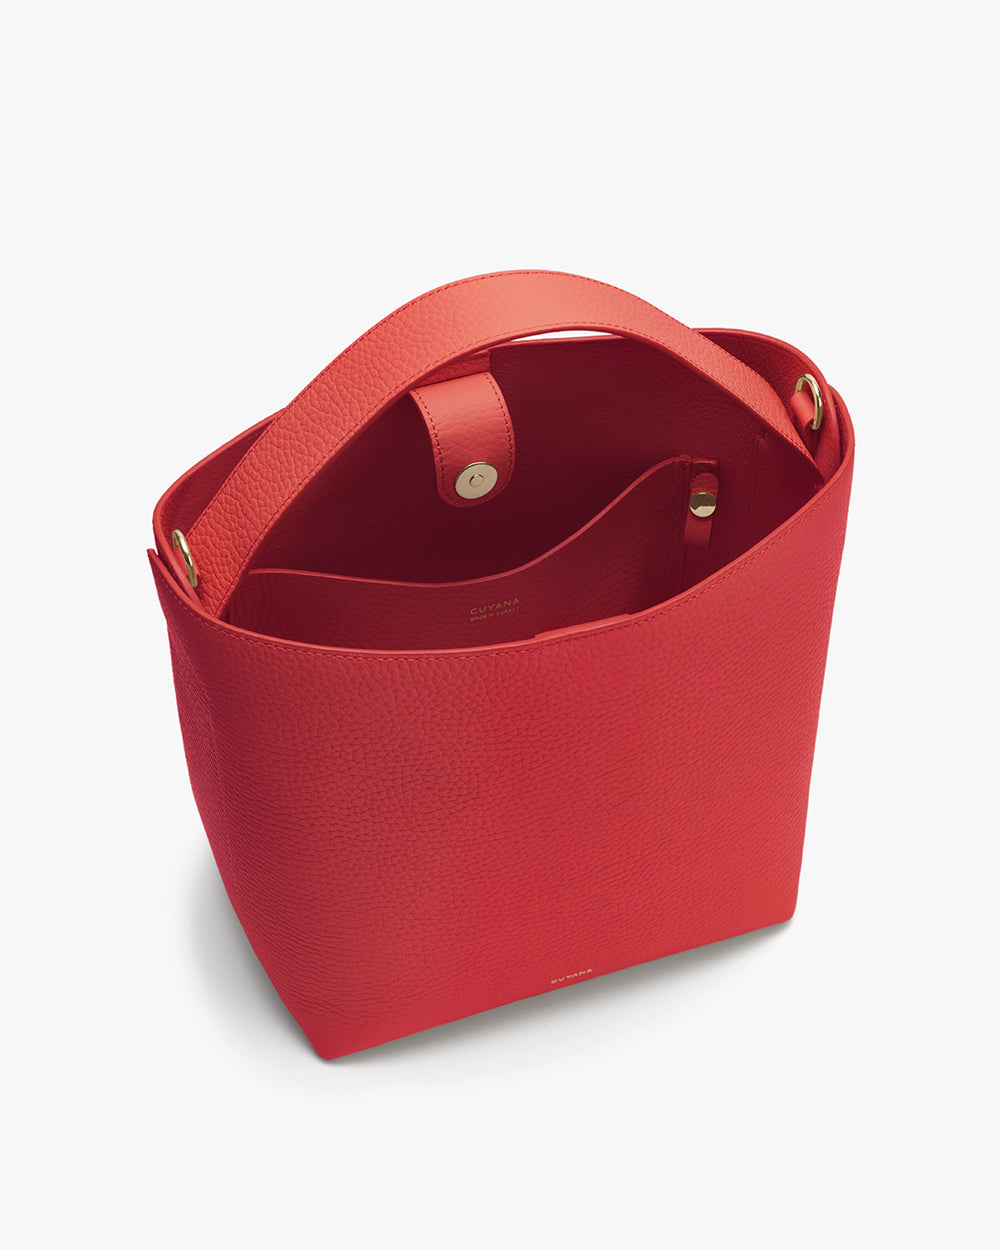 Red open handbag with interior pockets visible.